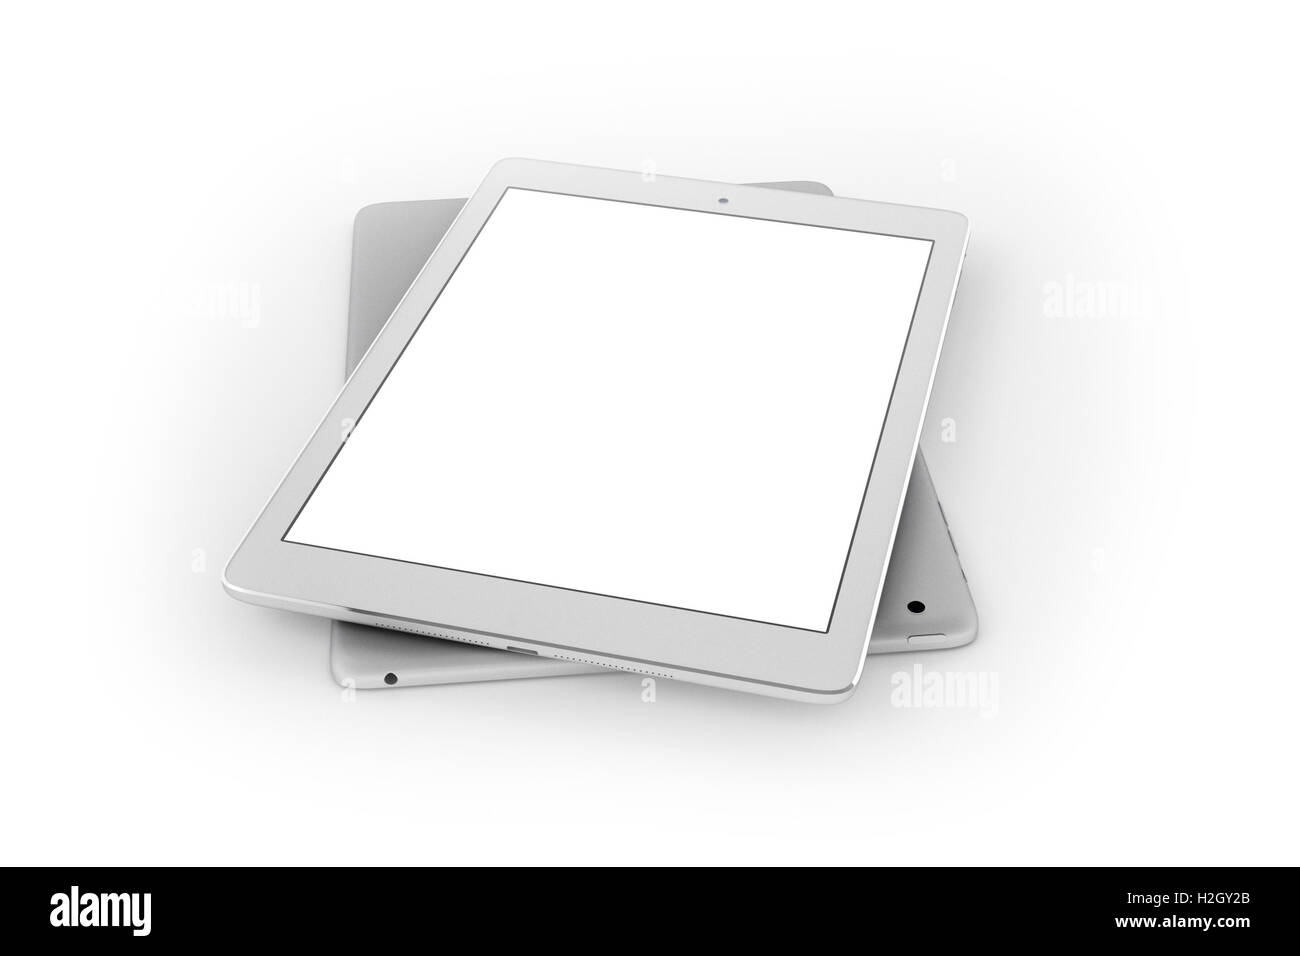 White tablets on white background - mock up Stock Photo